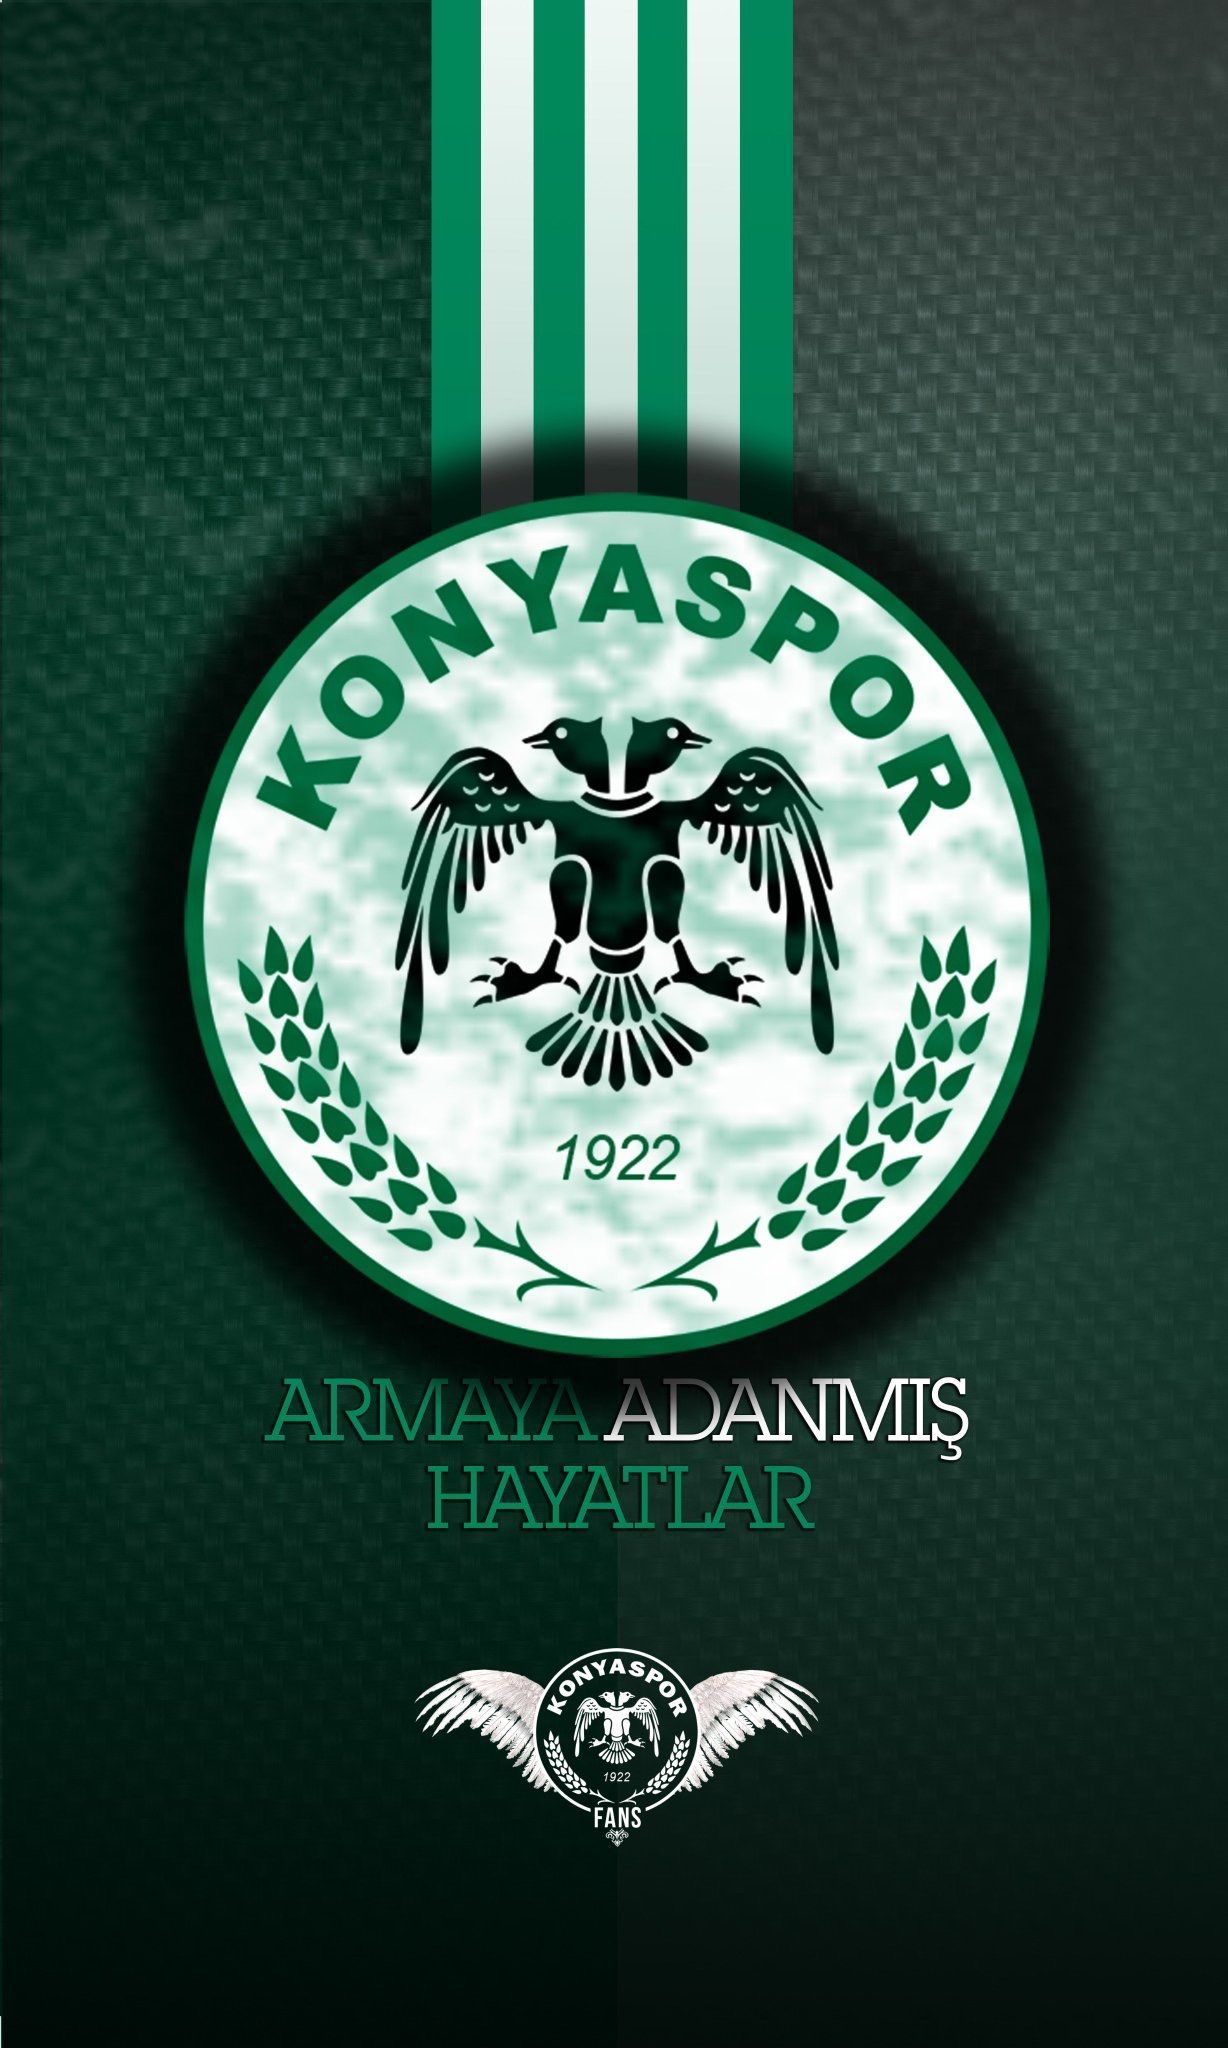 Konyaspor Wallpaper Free Konyaspor Background